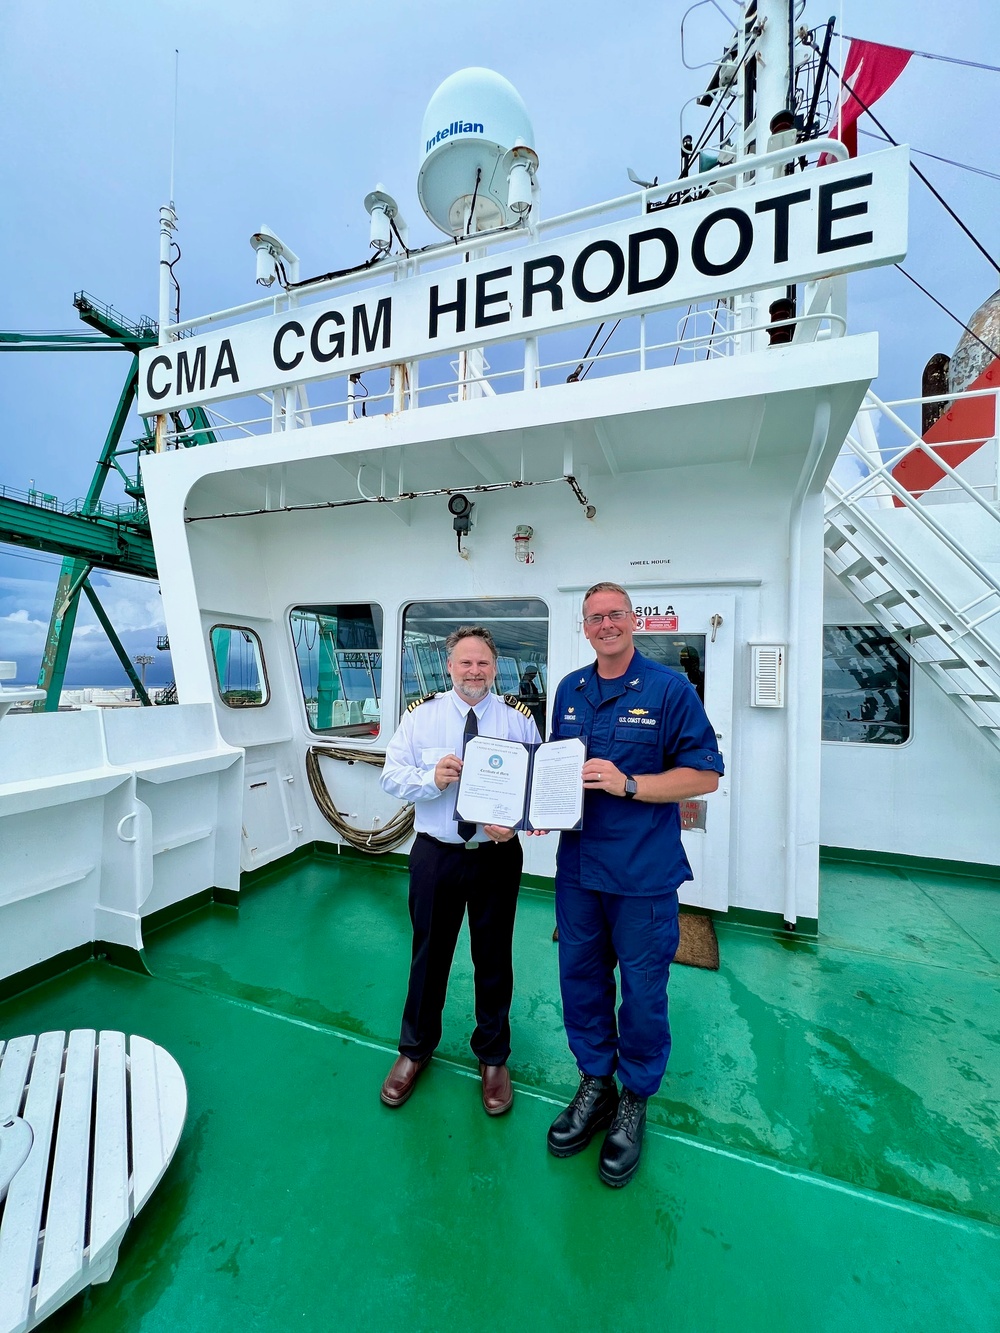 U.S. Coast Guard recognizes CMA CGM mariners for rescue  